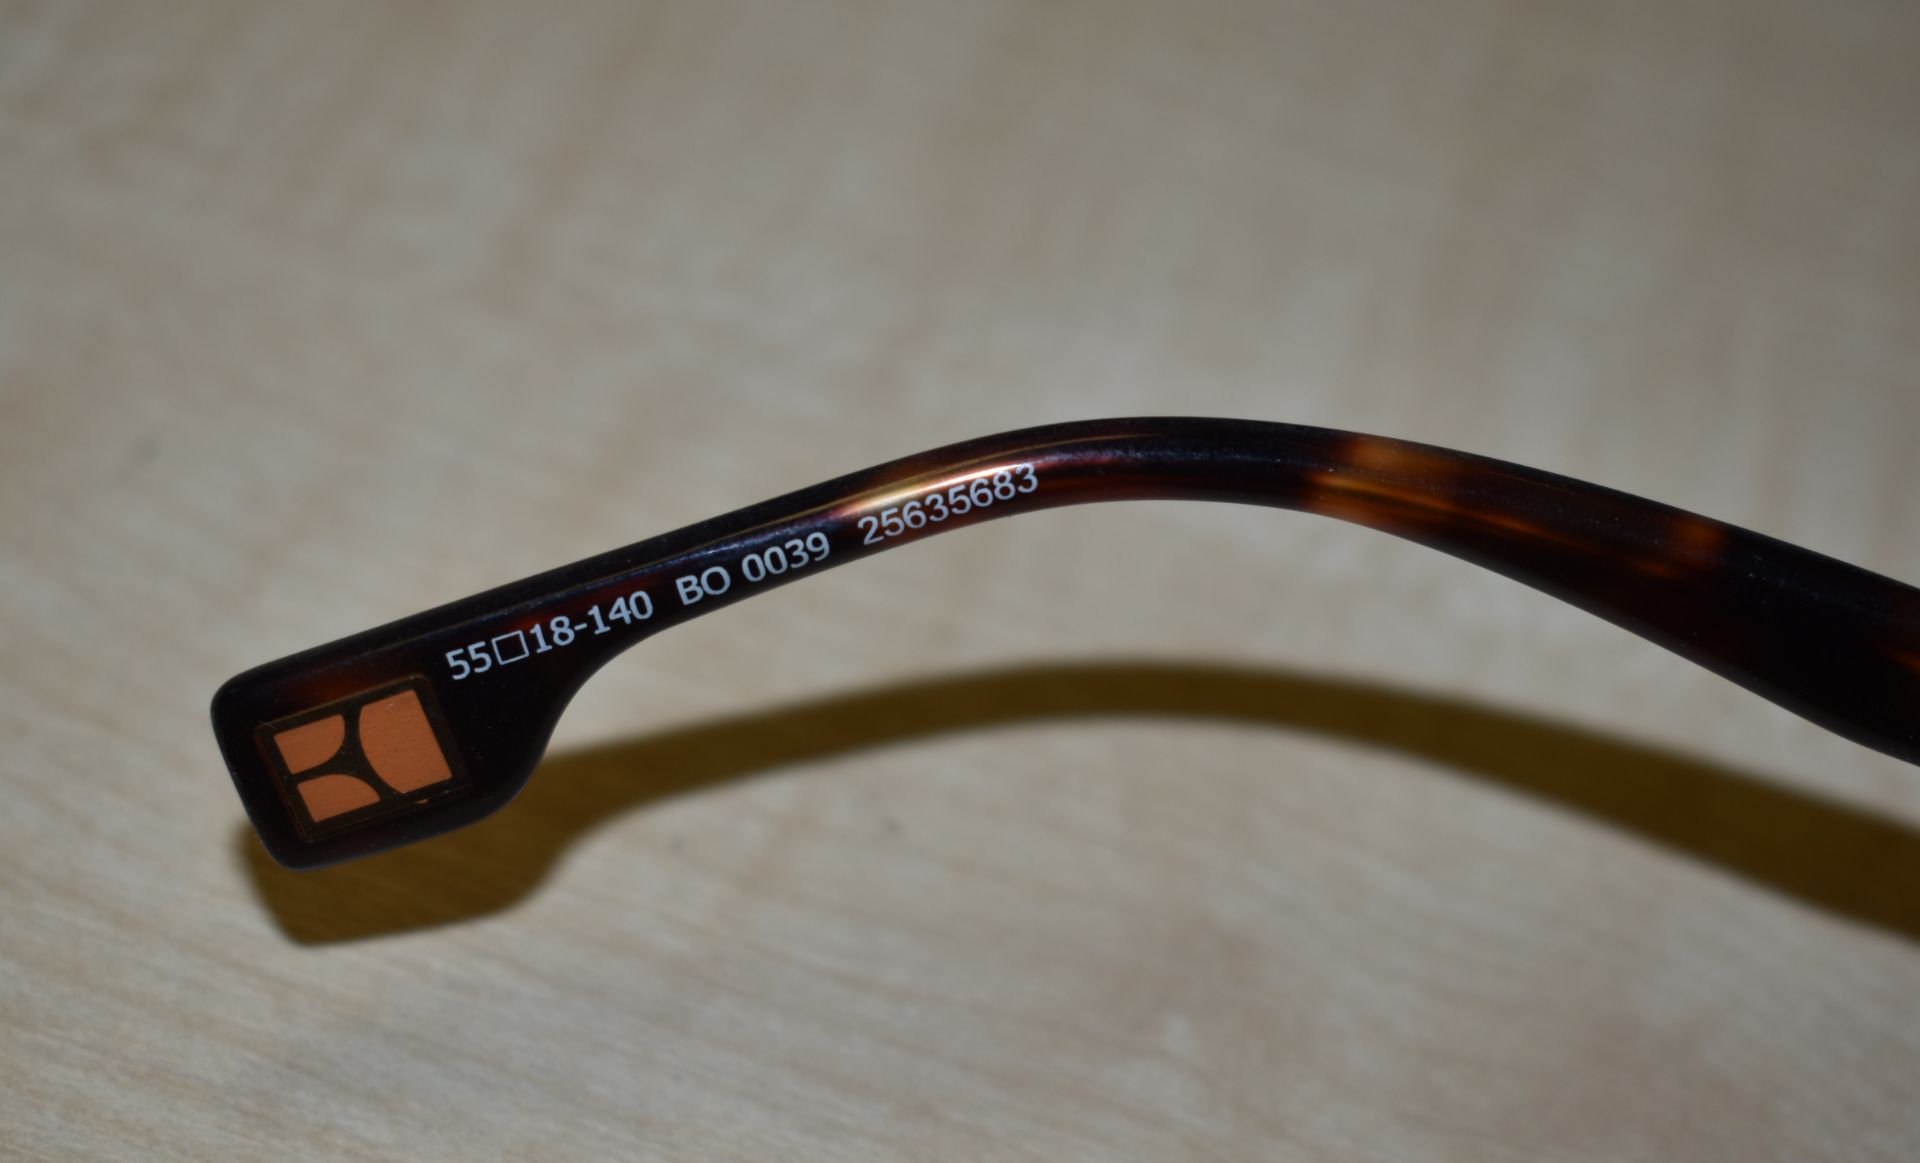 1 x Genuine BOSS ORANGE Spectacle Eye Glasses Frame - Ex Display Stock  - Ref: GTI193 - CL645 - - Image 5 of 11